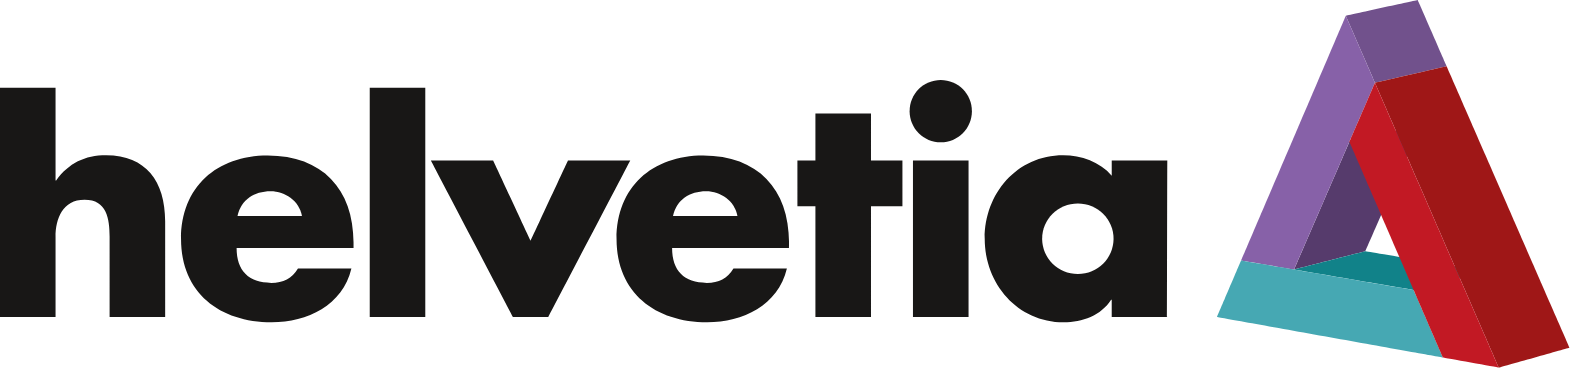 Helvetia Holding logo large (transparent PNG)